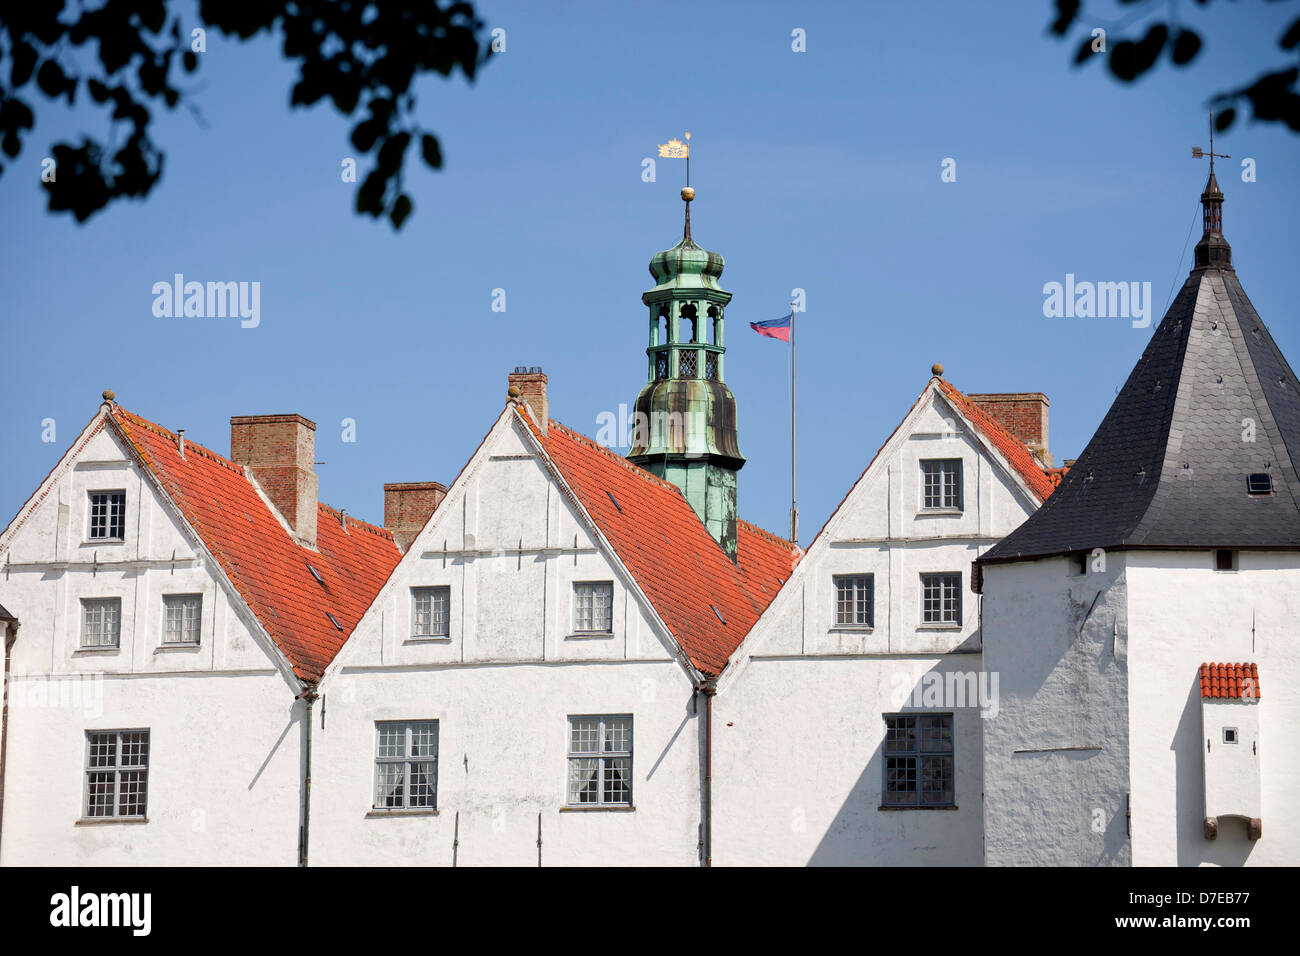 Quern Château, important château Renaissance en Glücksburg, Schleswig-Holstein, Allemagne, Europe Banque D'Images